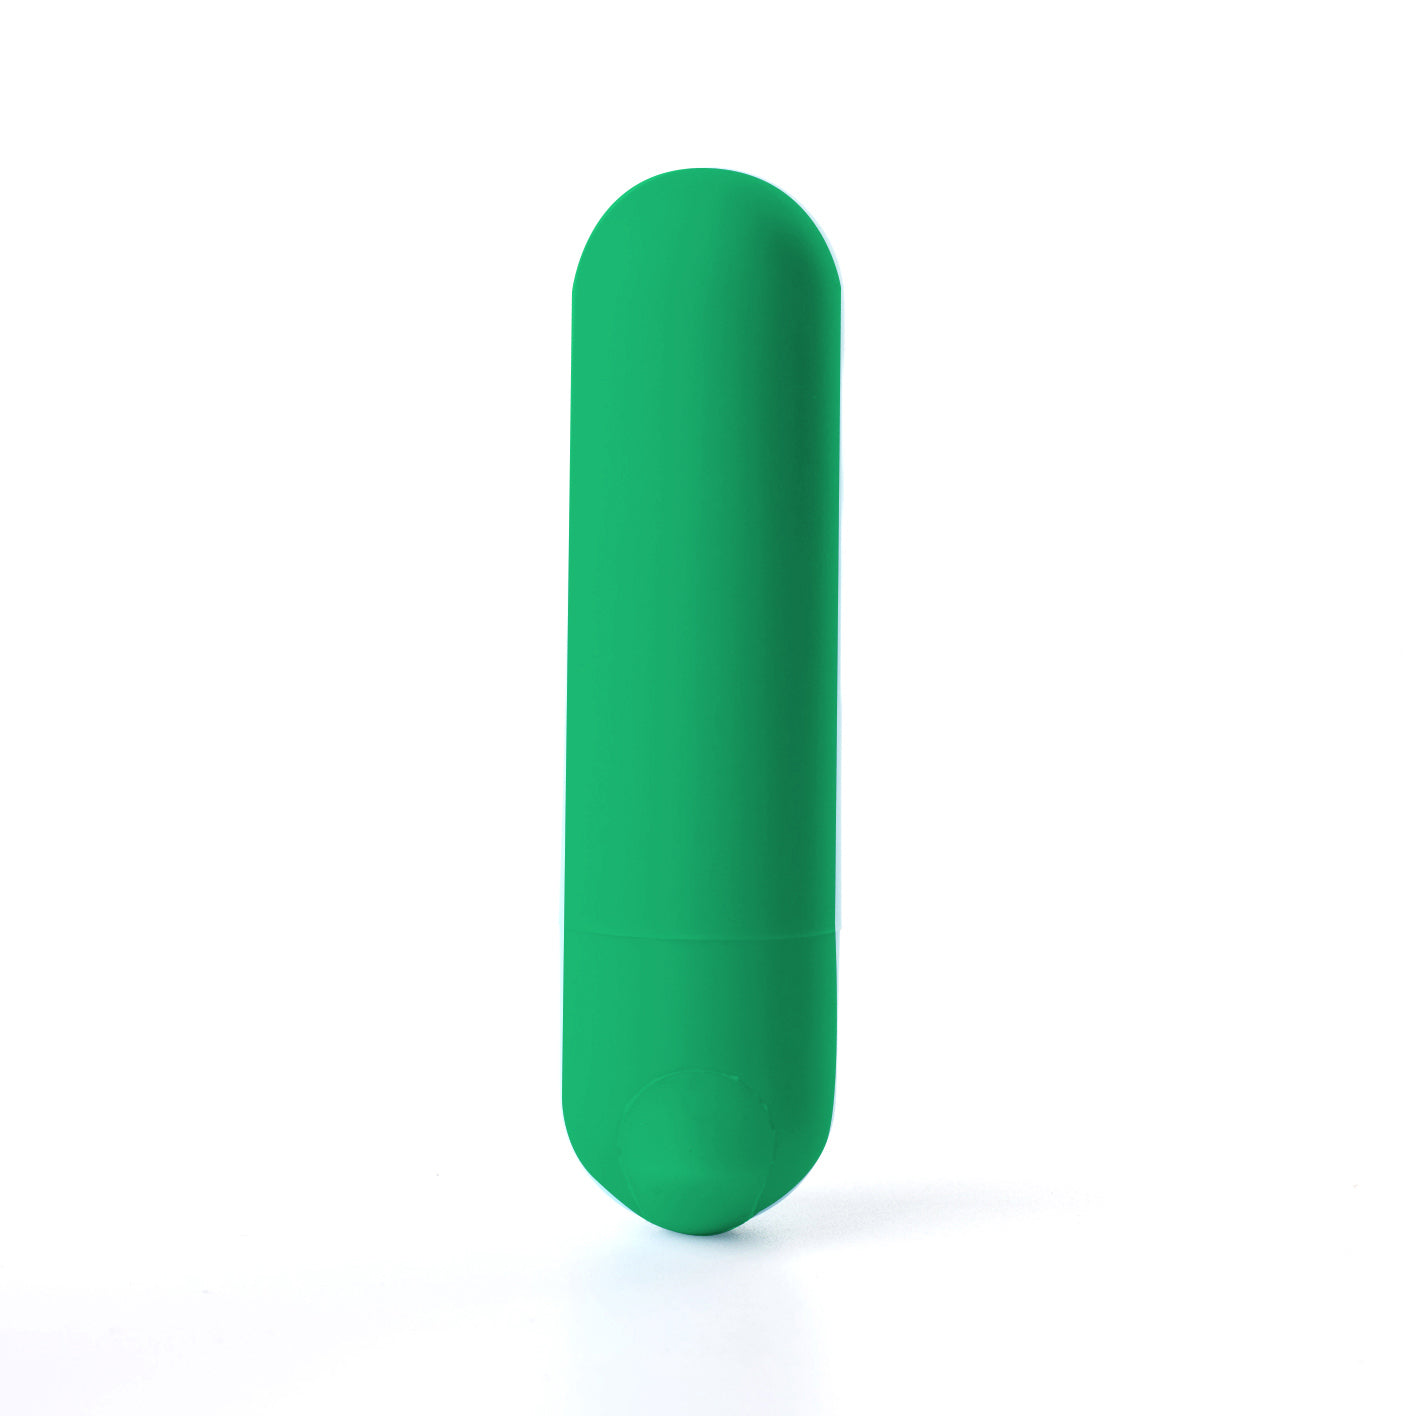 Jessi Super Charged Mini Bullet Vibrator - Emerald